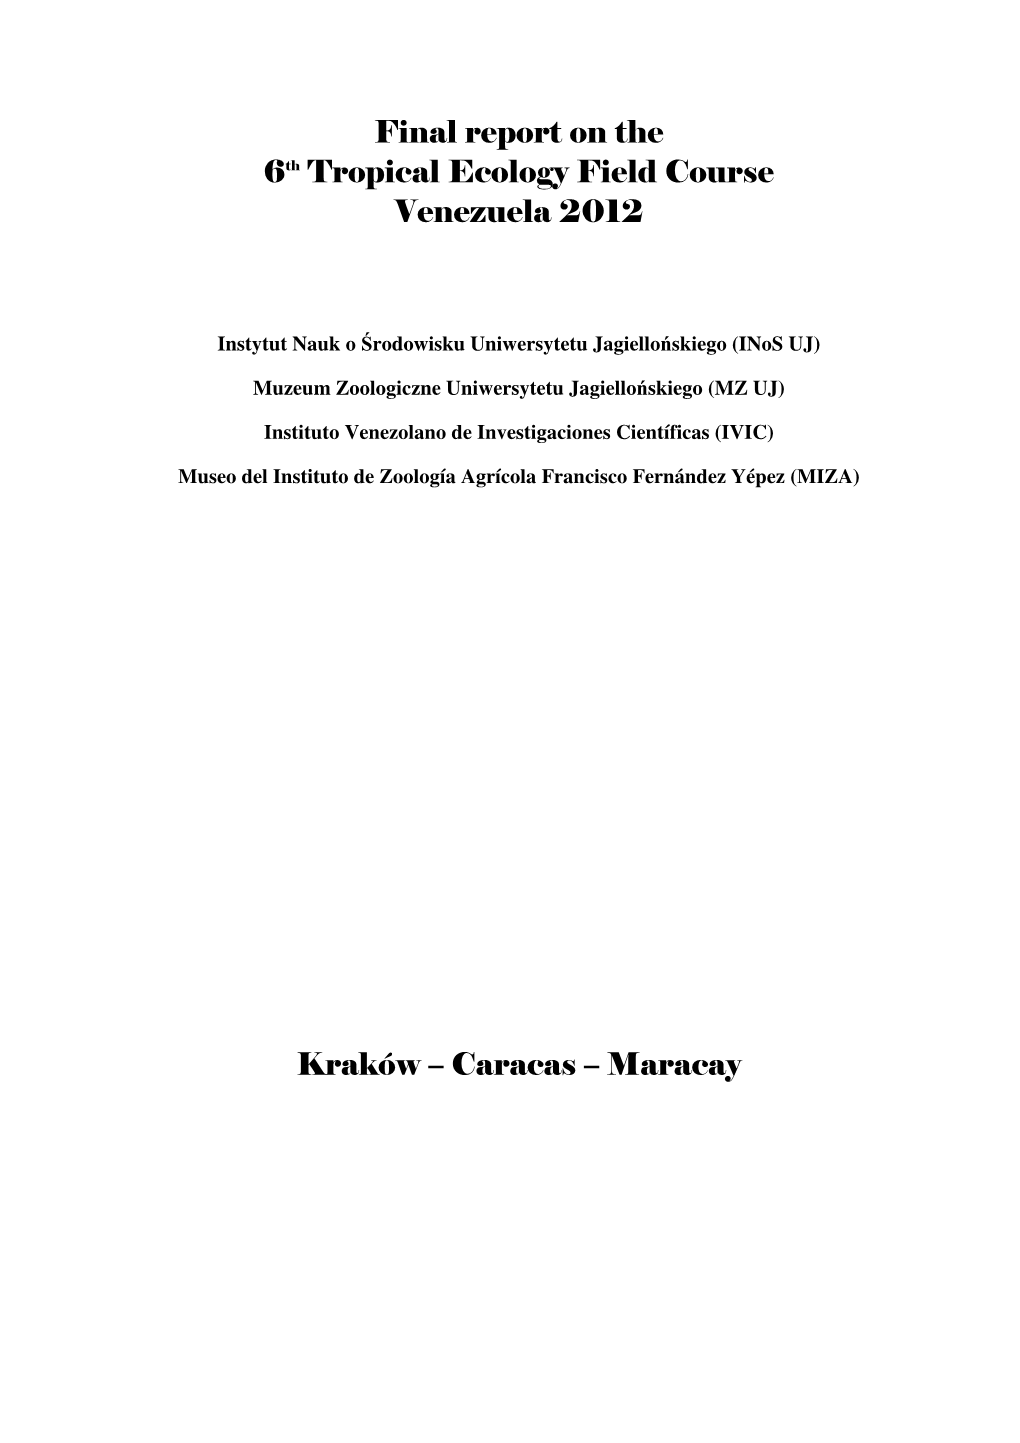 Final Report on the 6Th Tropical Ecology Field Course Venezuela 2012 Kraków – Caracas – Maracay